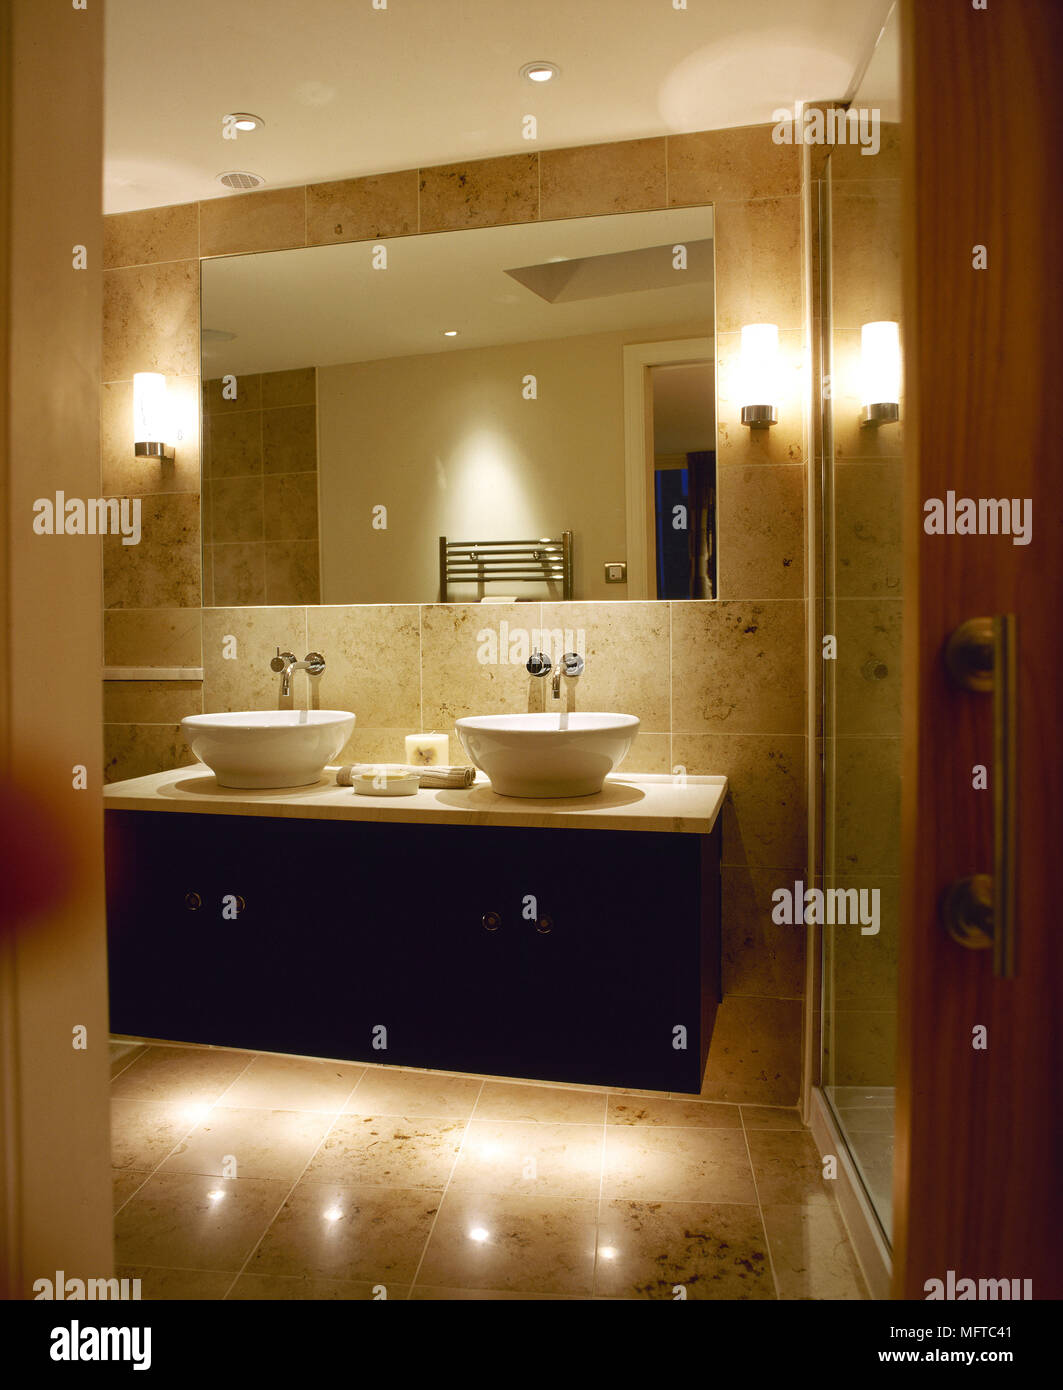 Luz espejo baño Aplique pared Apliques Lámpara espejo moderna oro